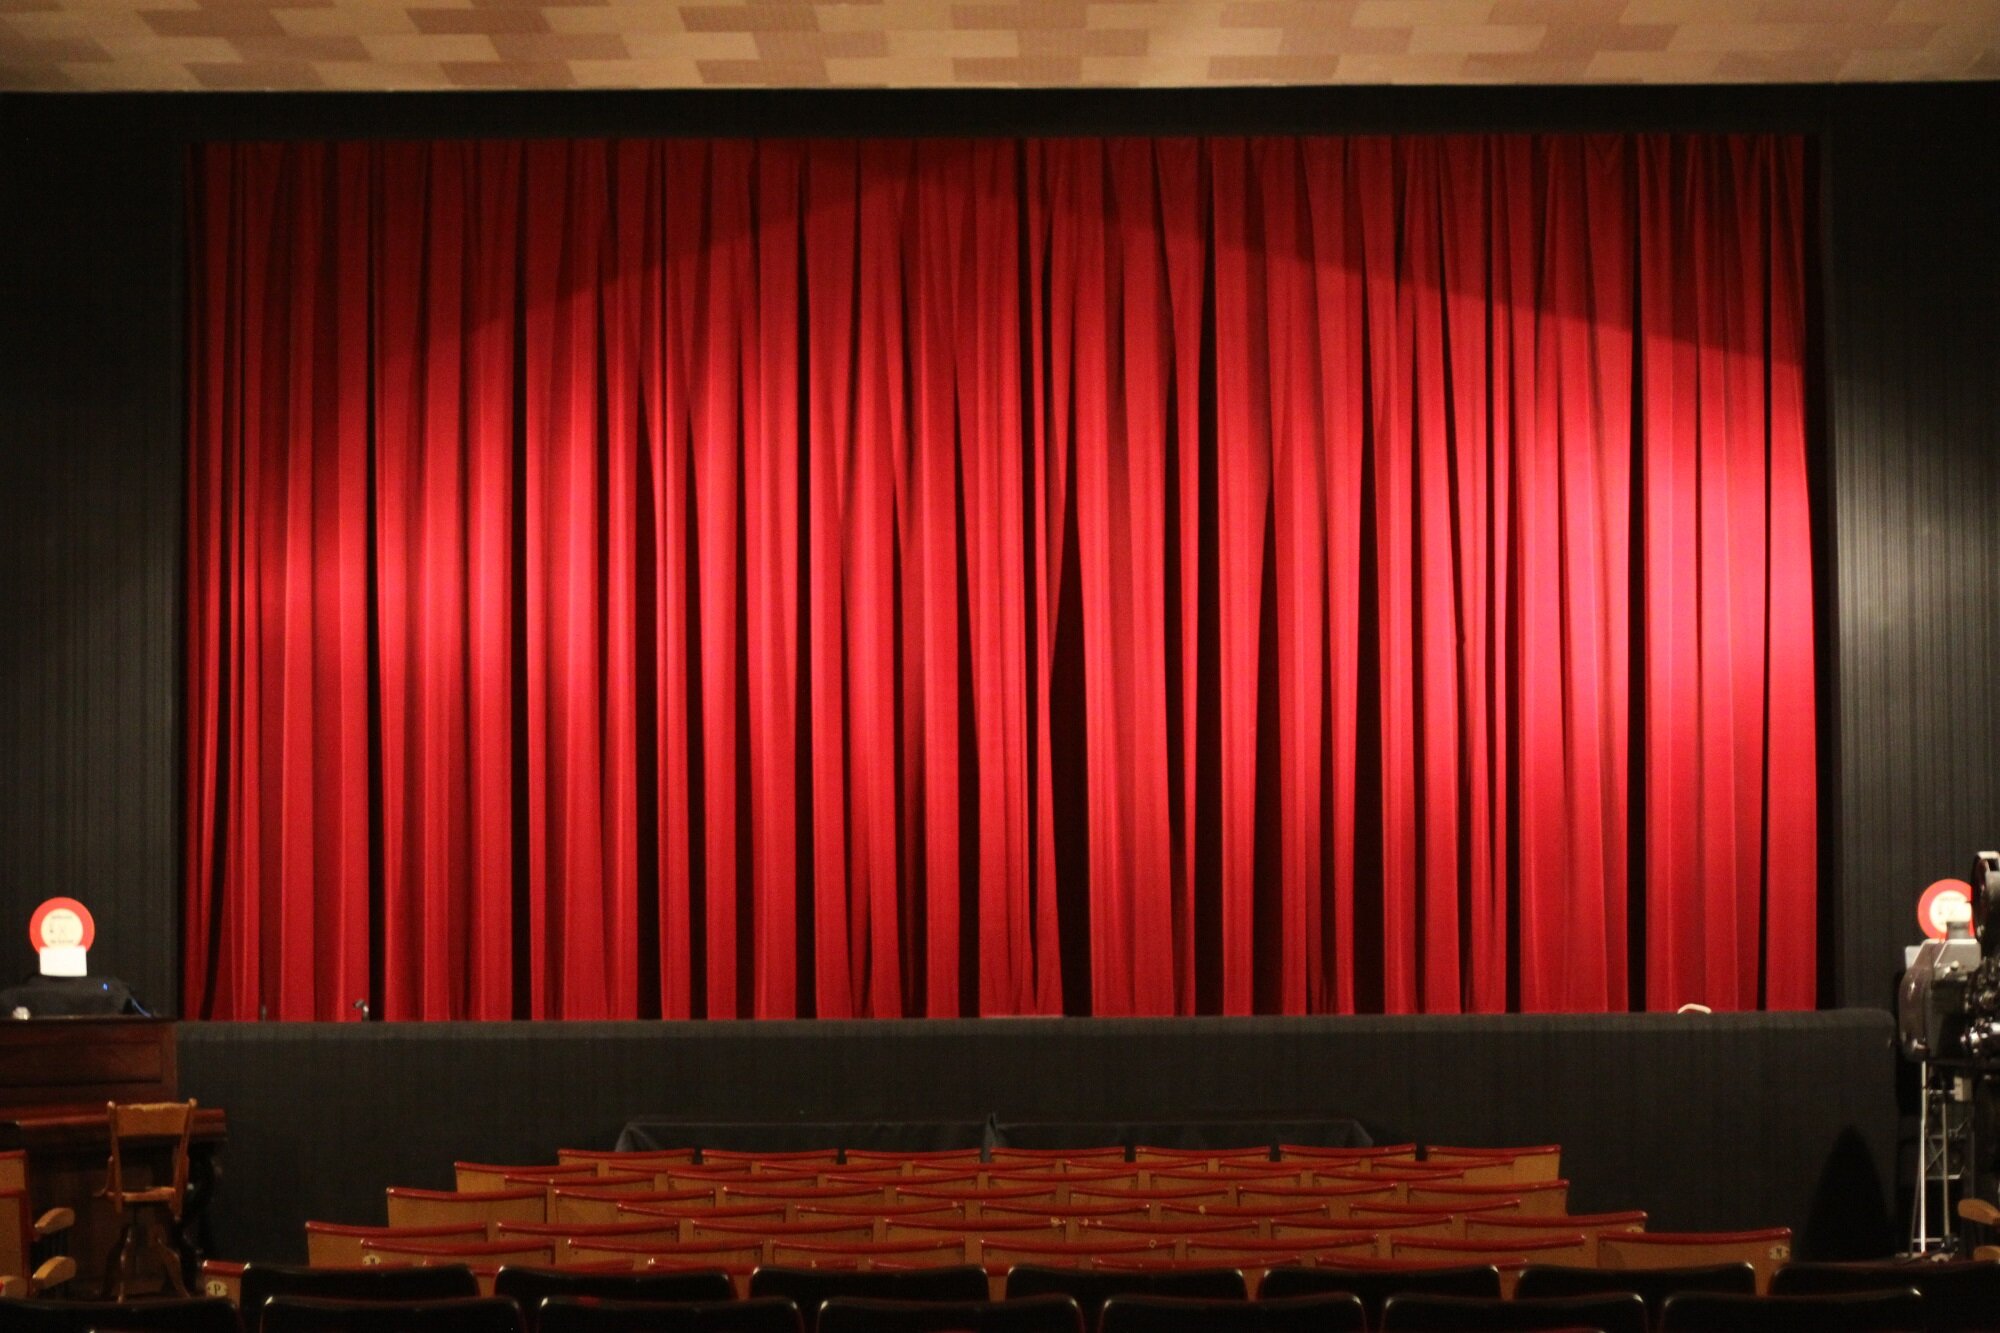 Cinema Bellecombe can accommodate 270 spectators.